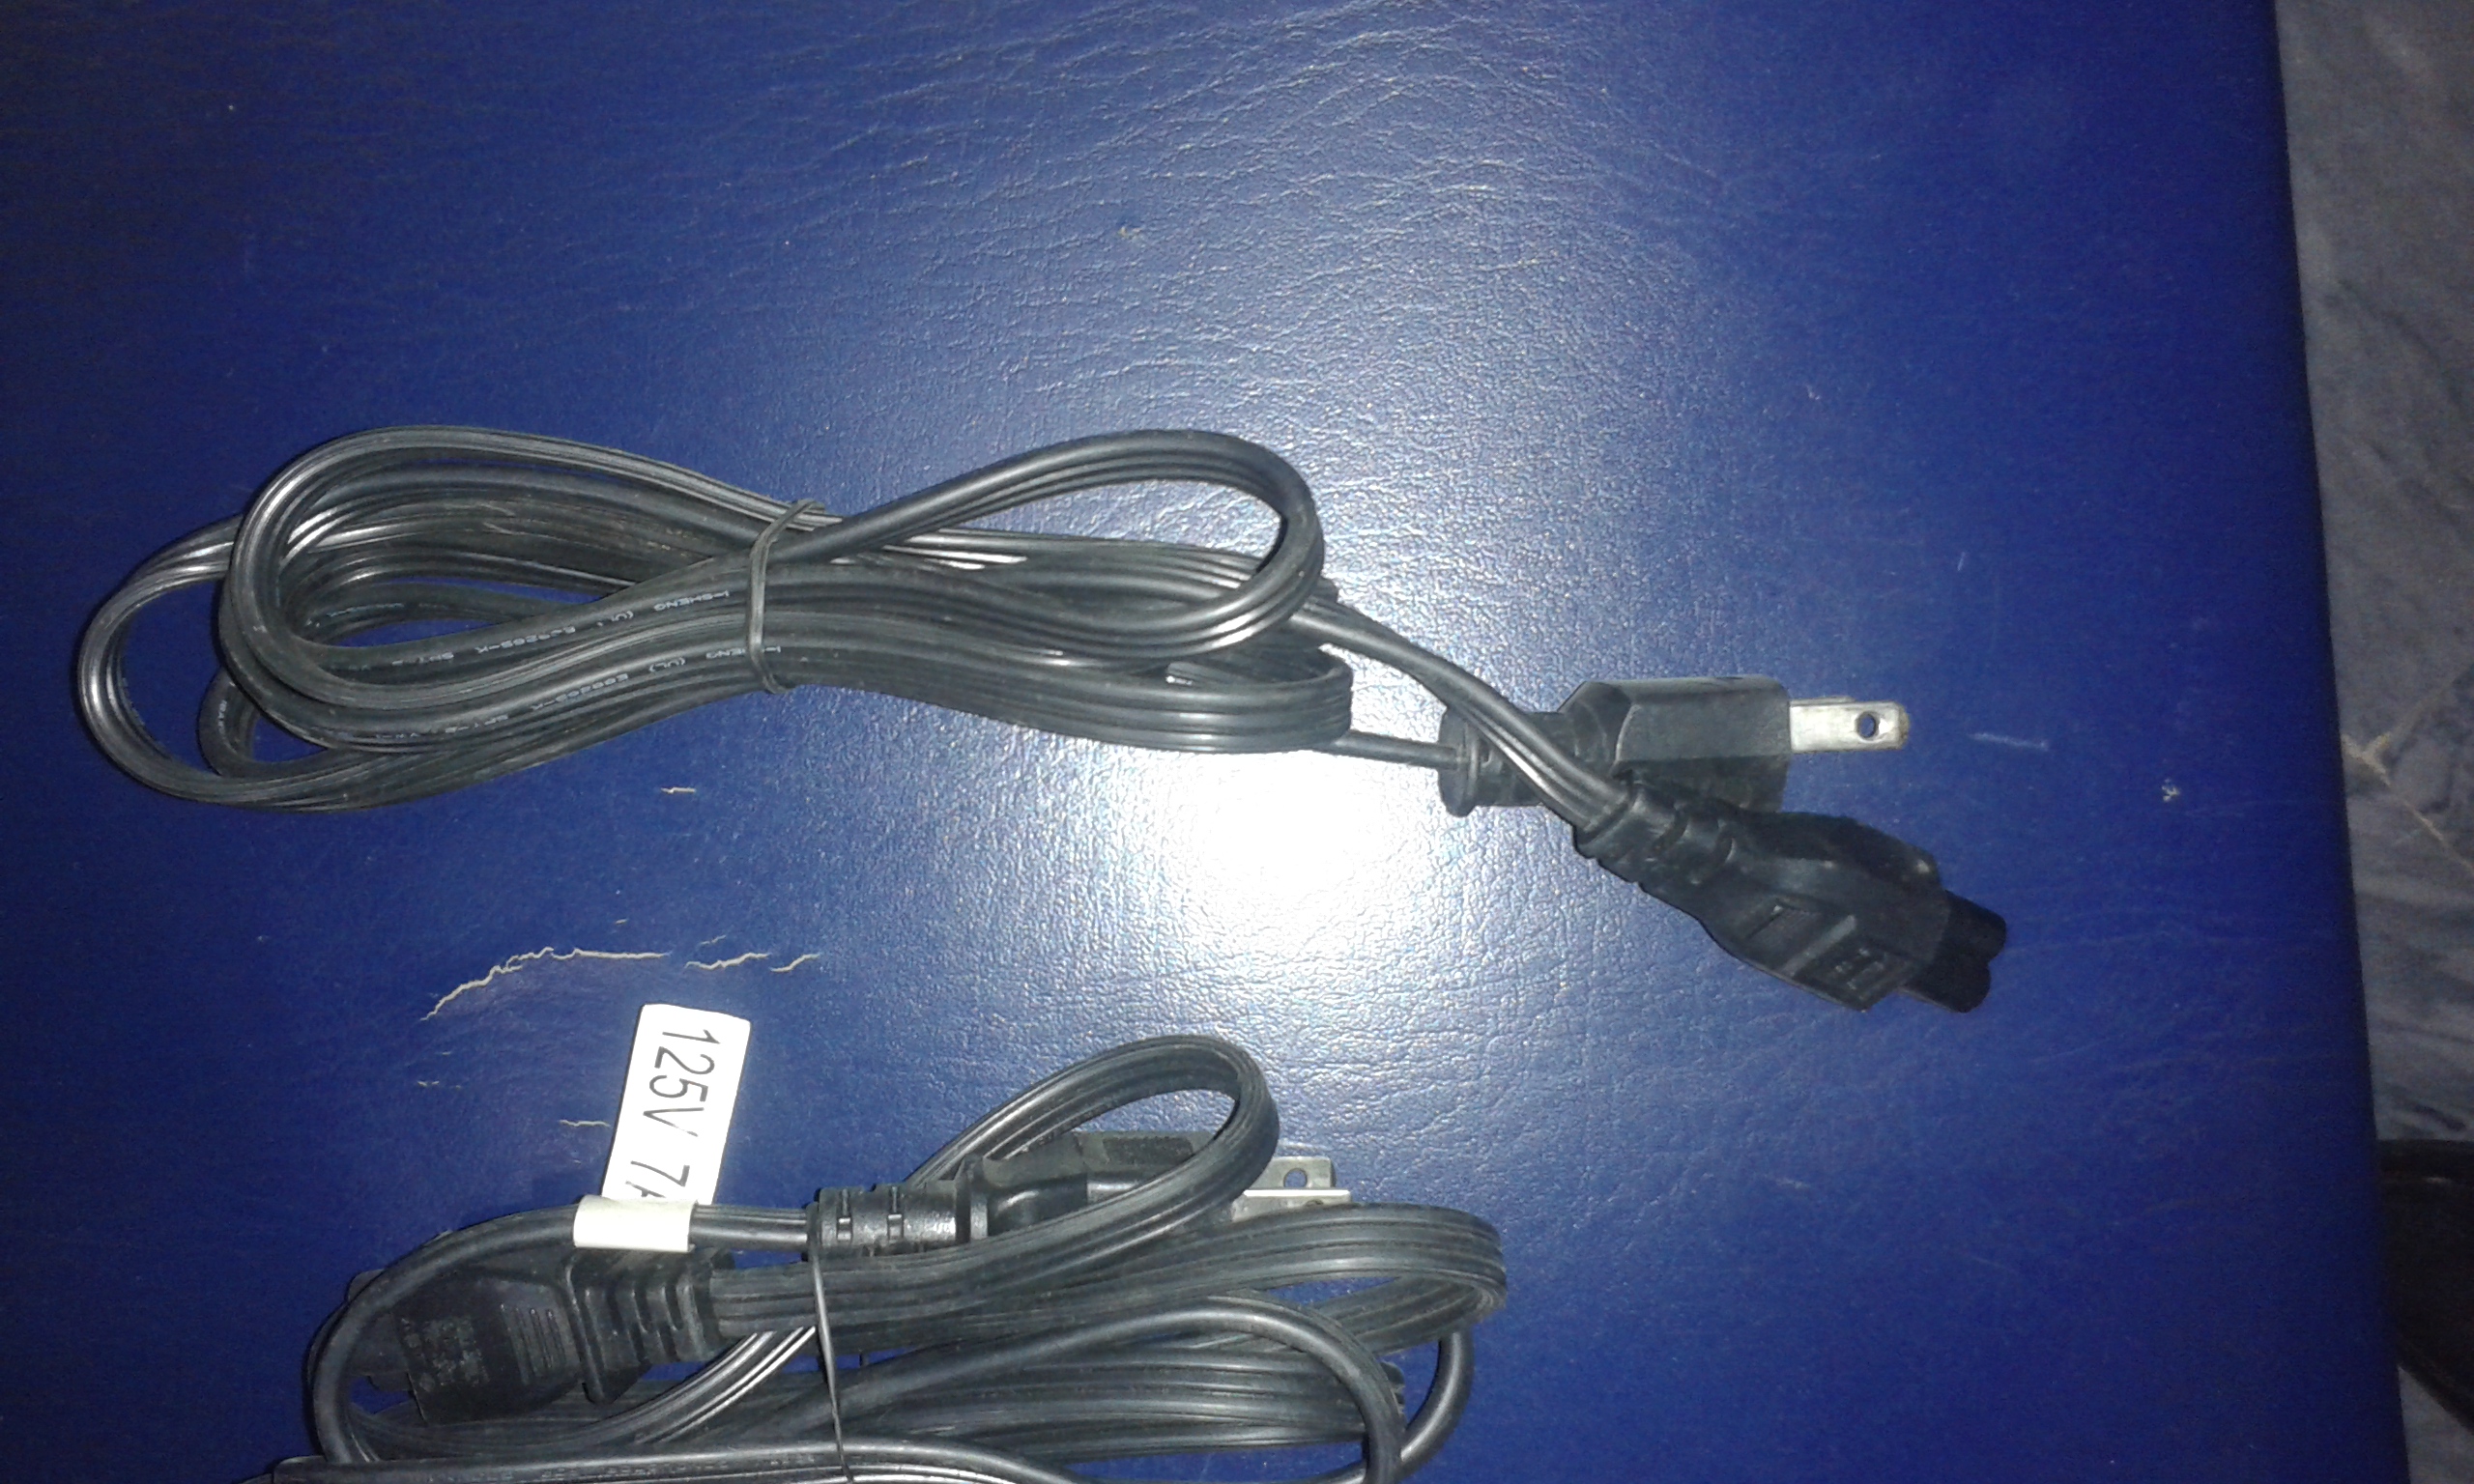 Laptops Power Cables Slim_1